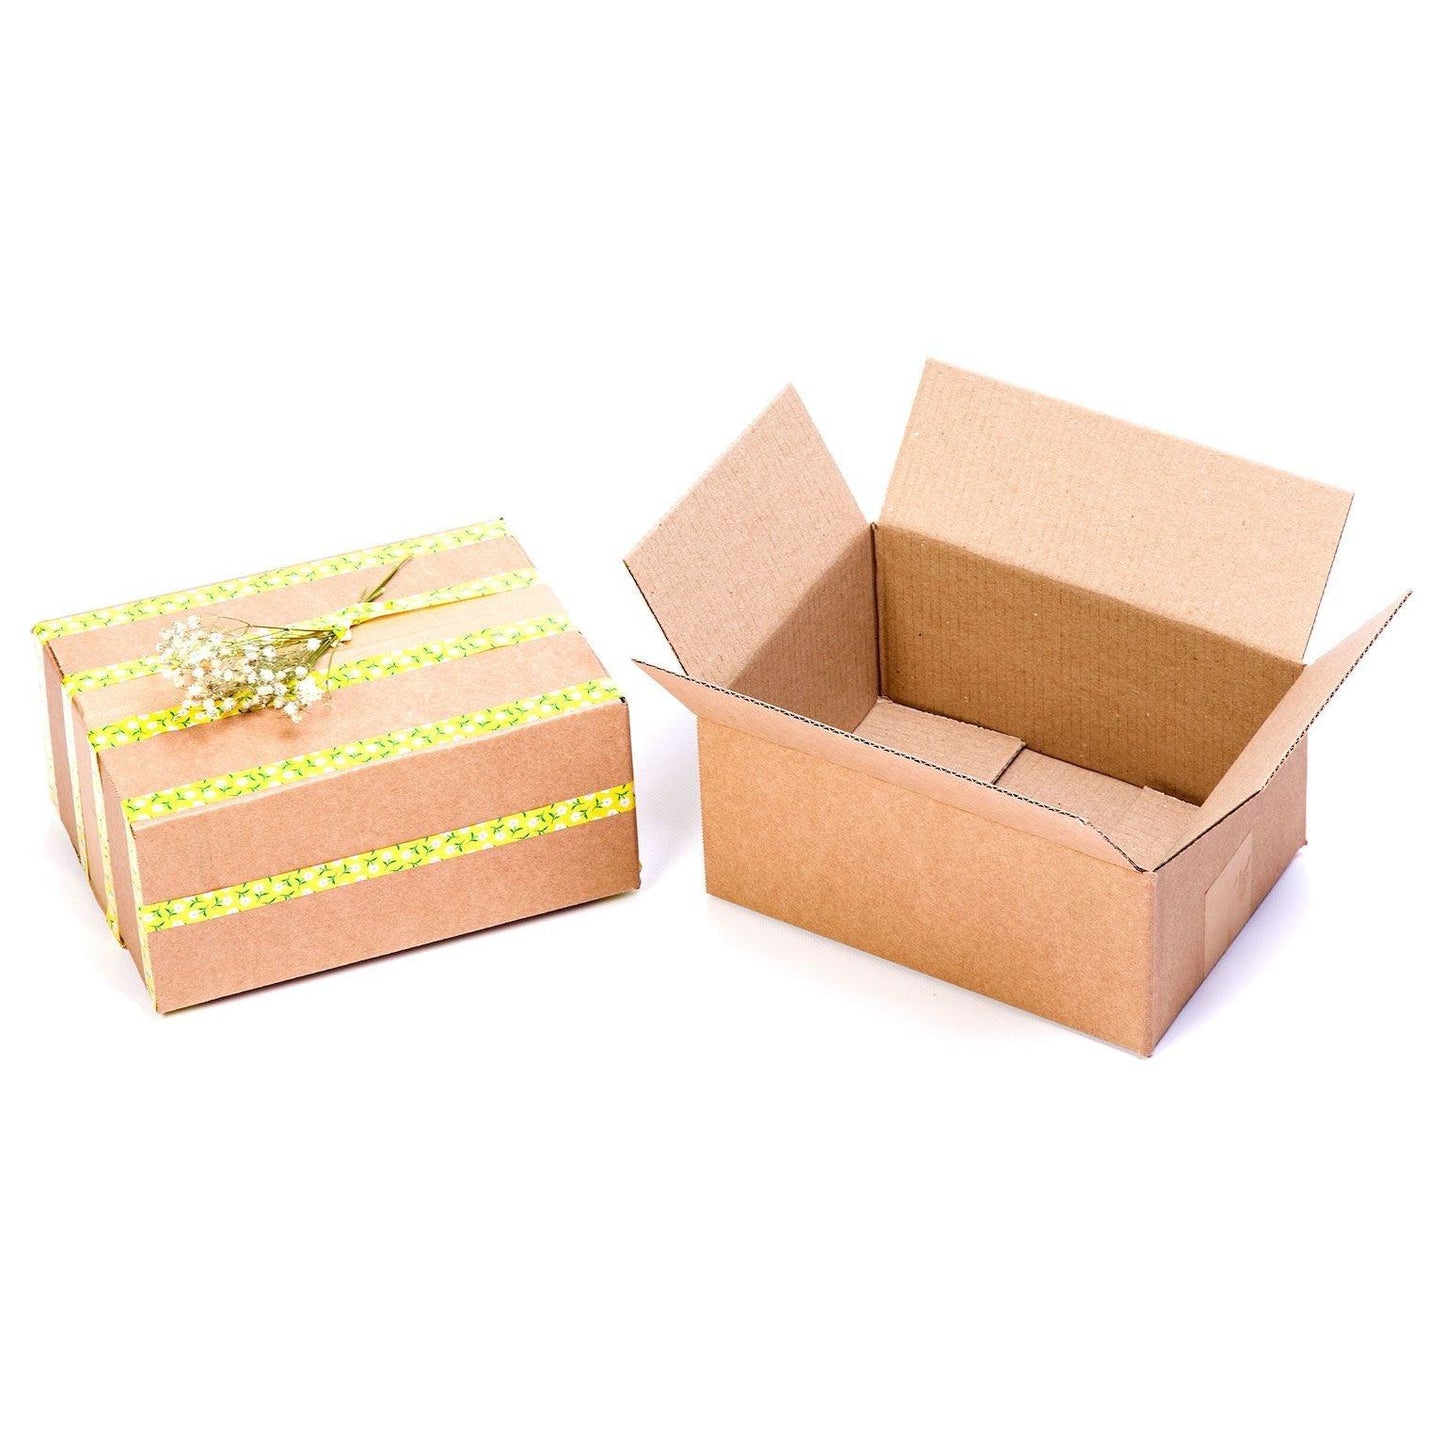 Caja carton Postal pequeña Envios | DCBOX1133 | 228X160x102 mm